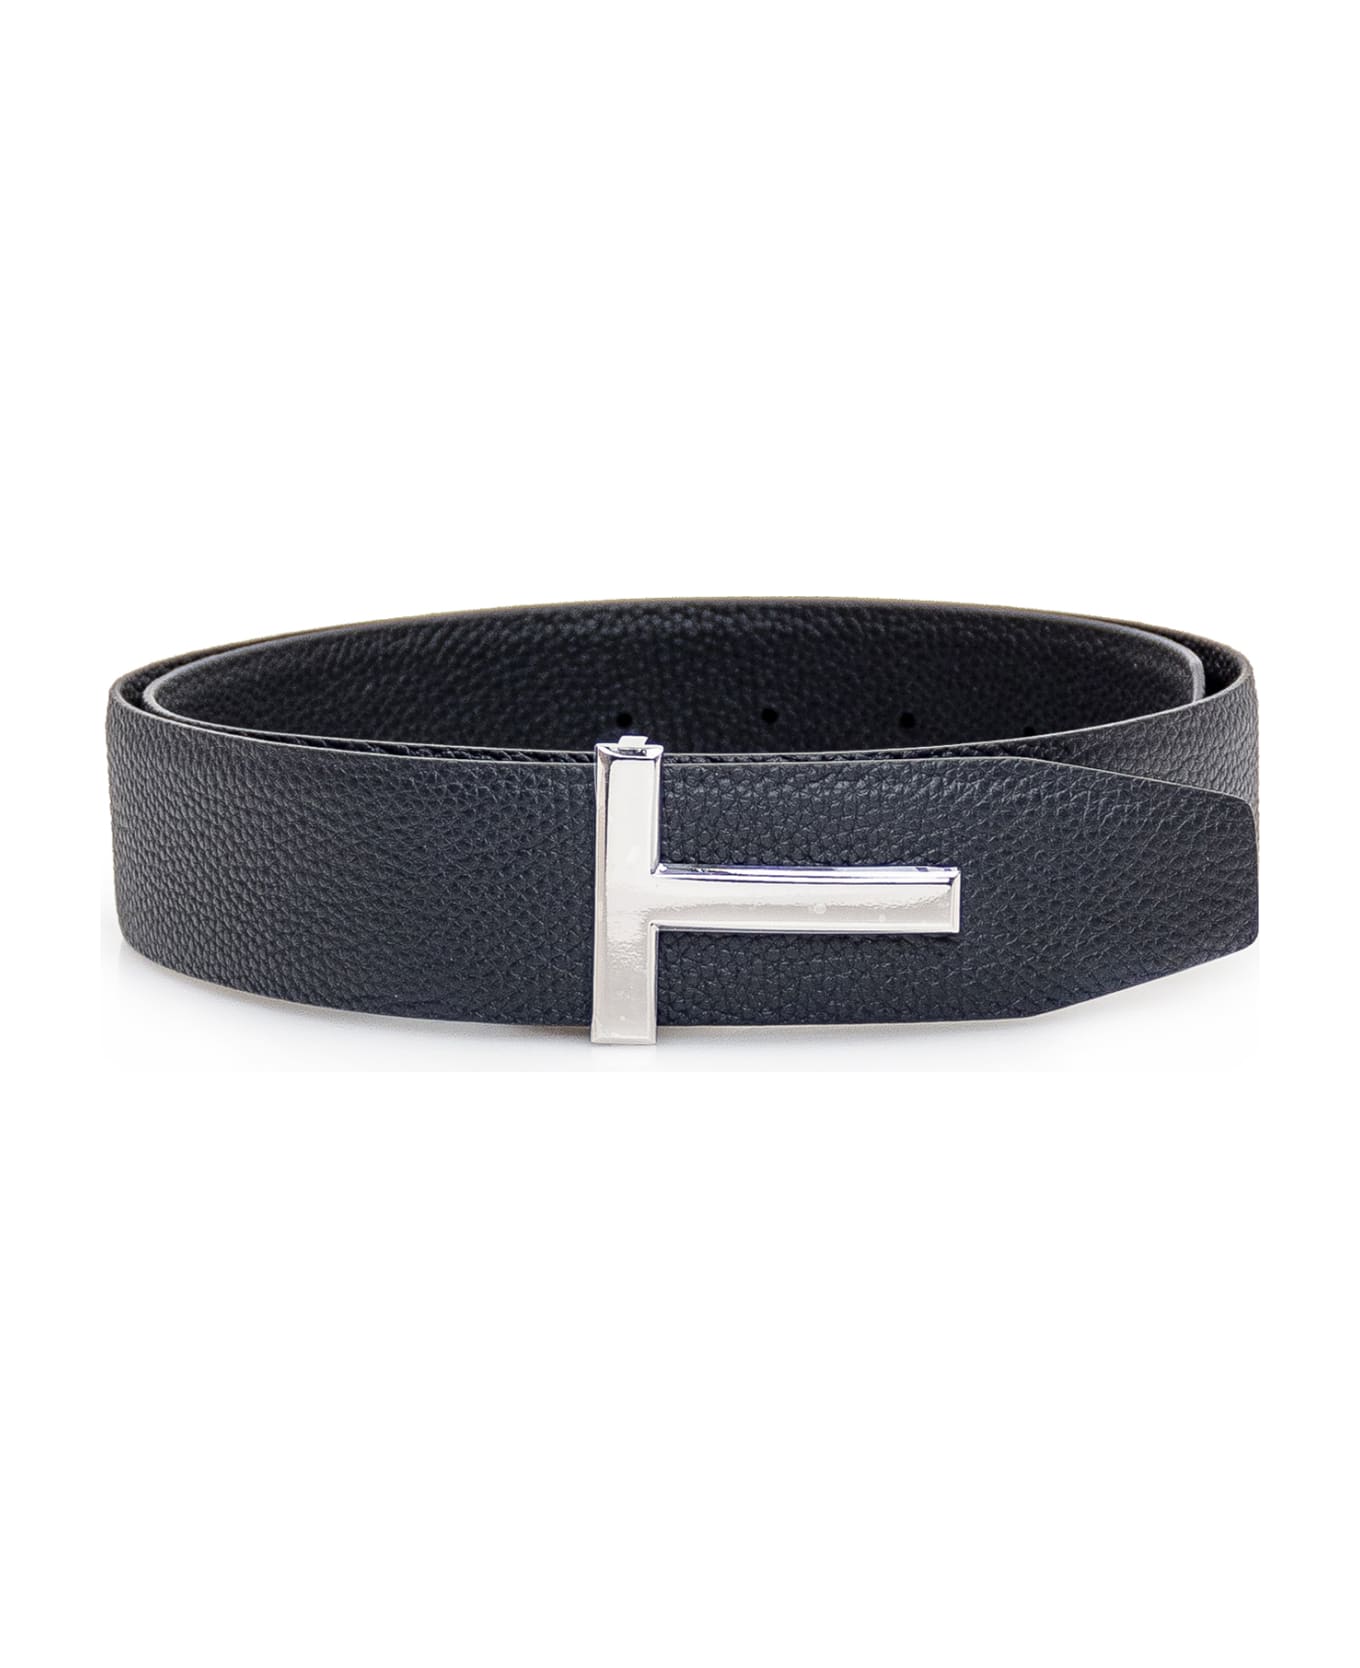 Tom Ford Leather Belt - DARK NAVY BLACK